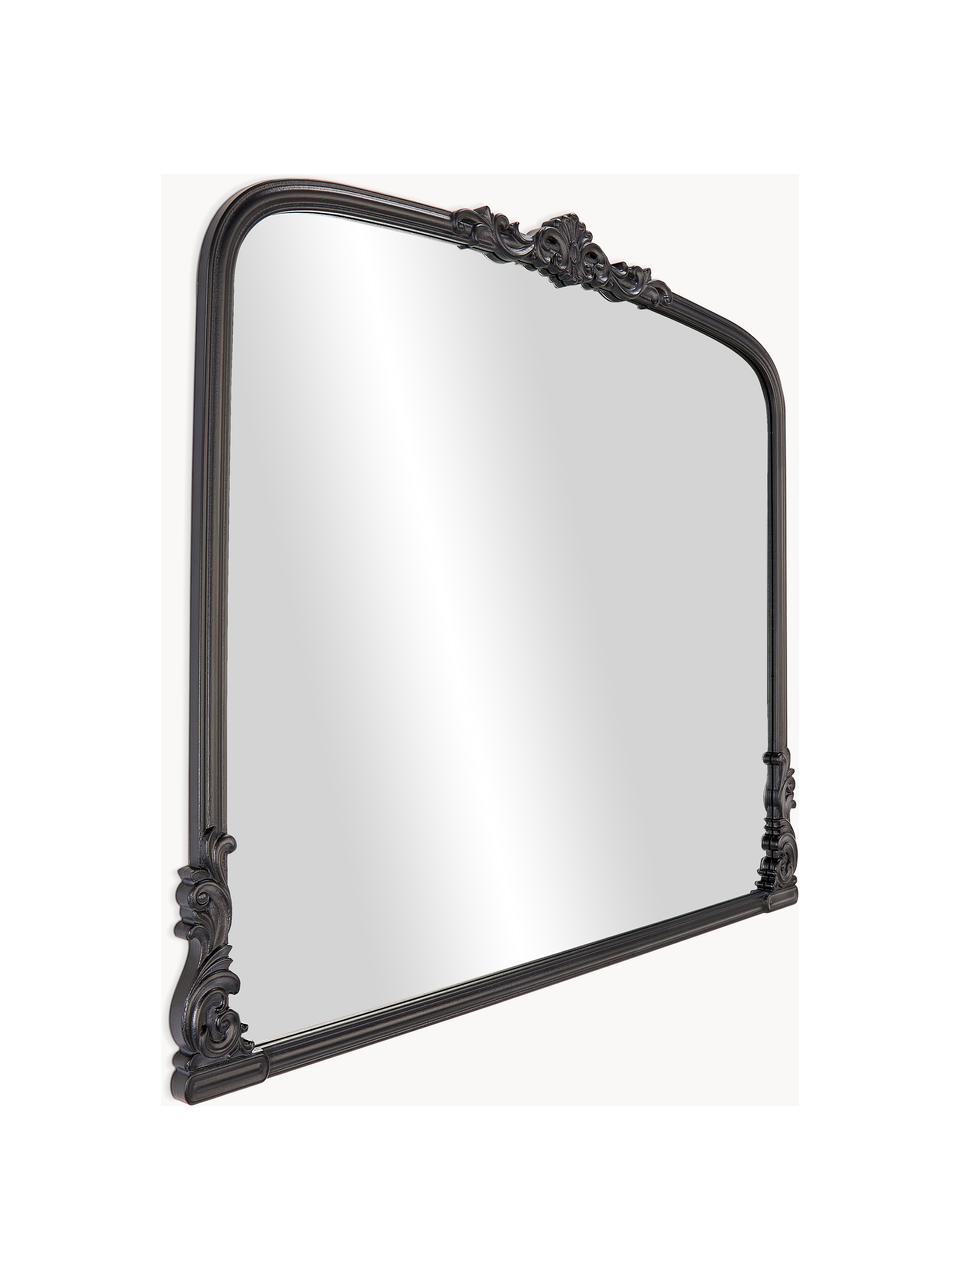 Barokní nástěnné zrcadlo Fabricio, Černá, Š 100 cm, V 85 cm